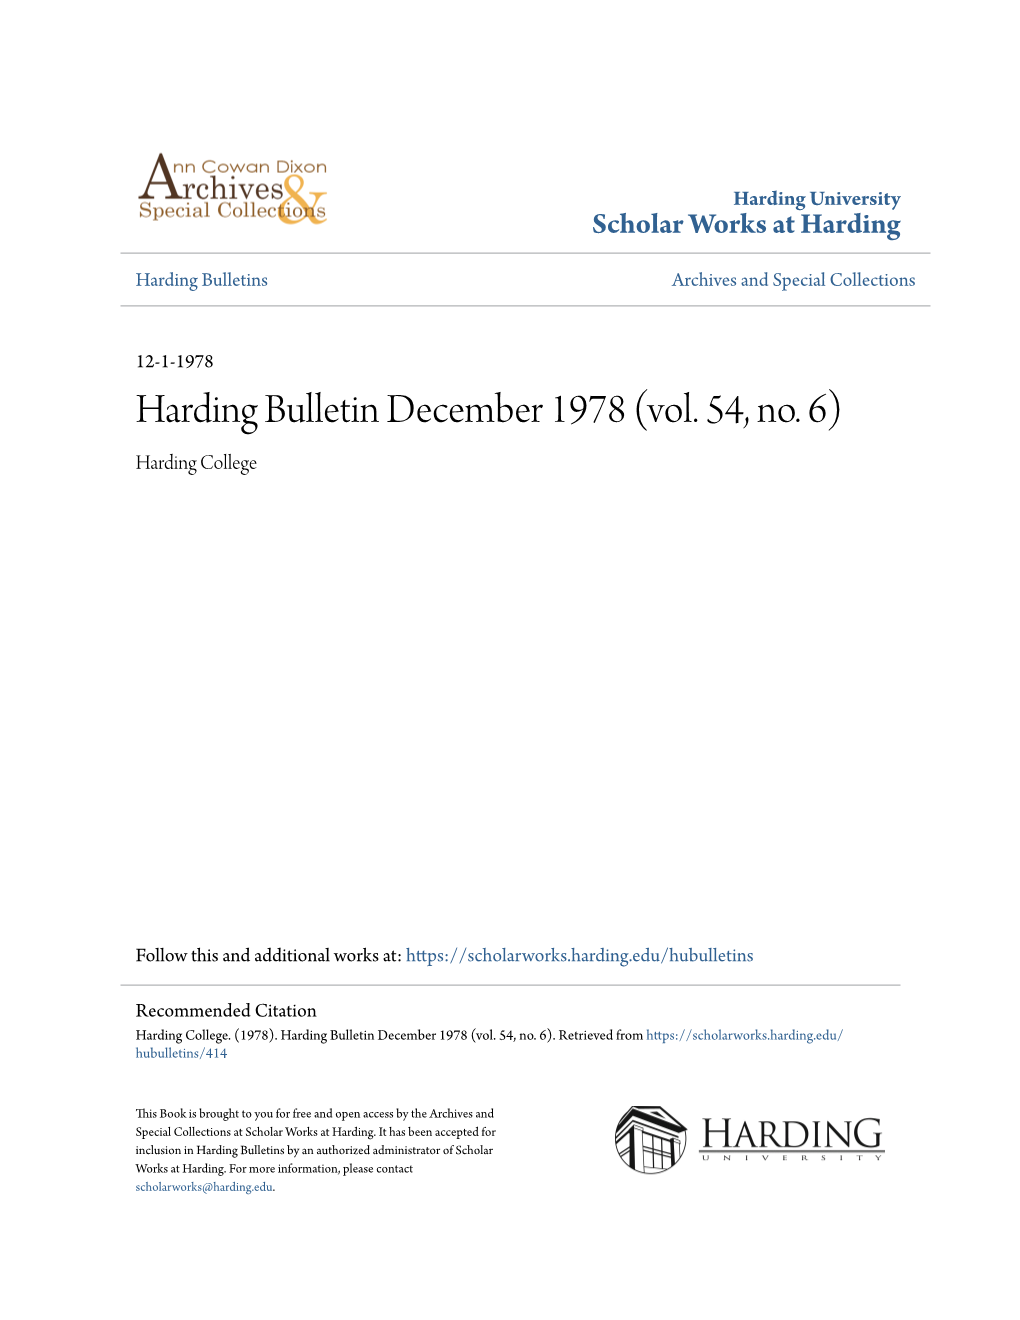 Harding University Scholar Works at Harding